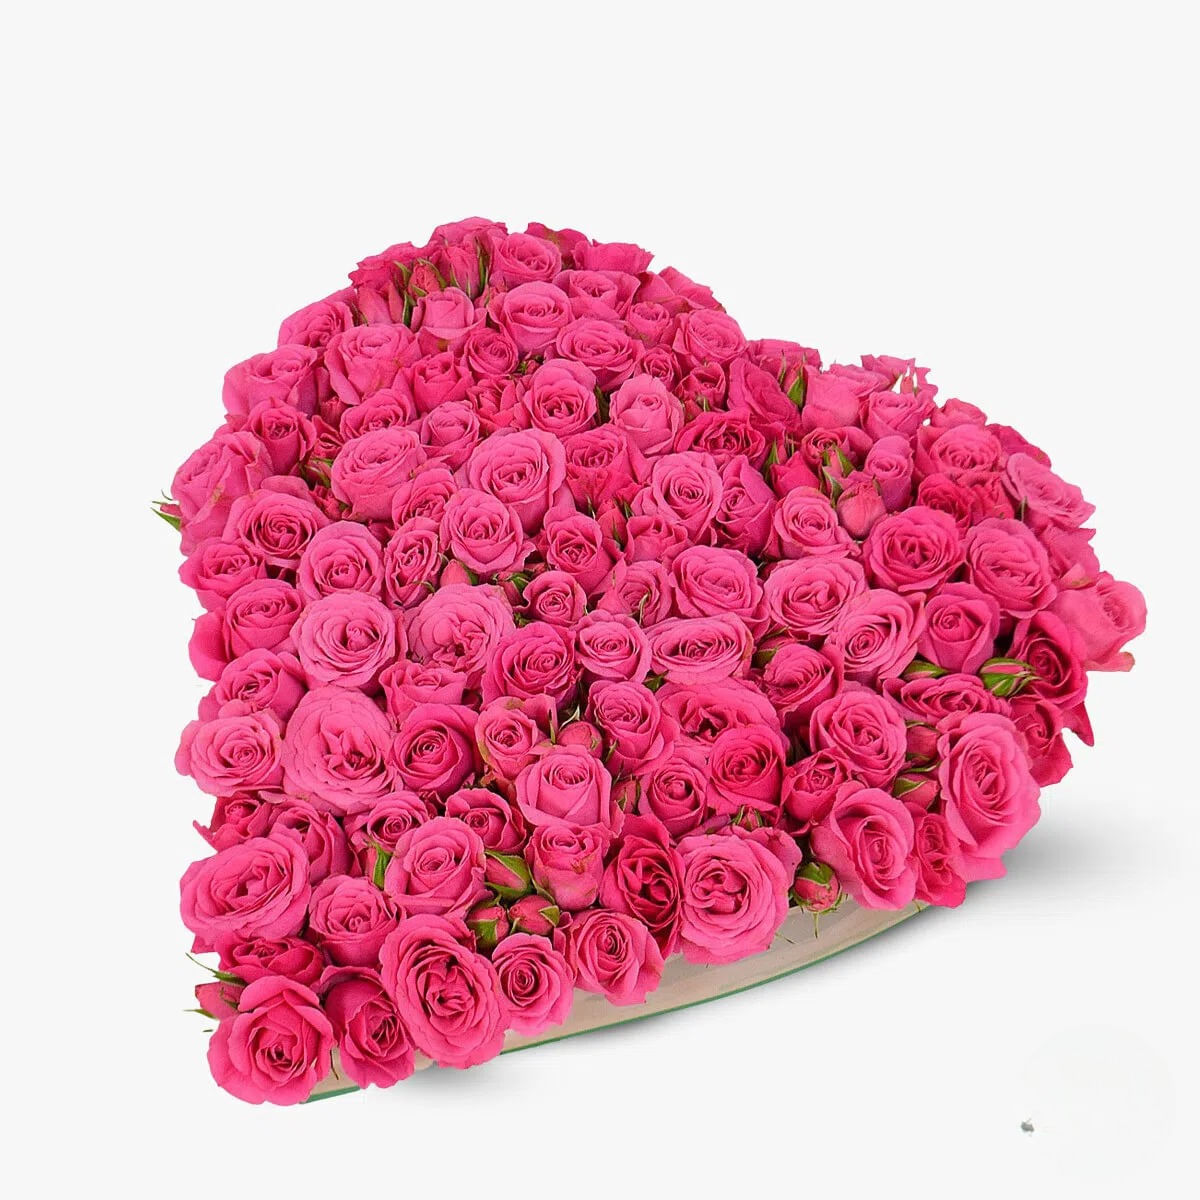 Buchet cu minirosa roz – Premium Buchet